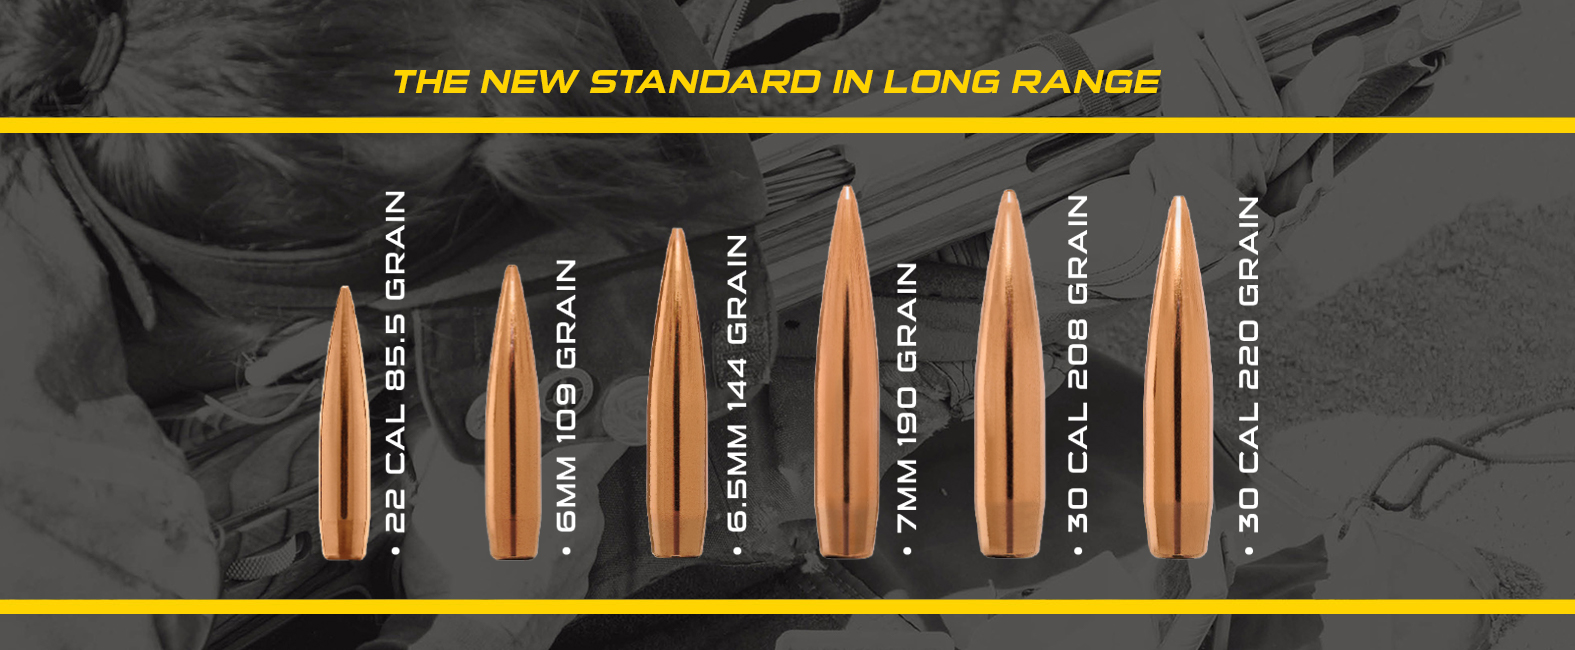 New 2020 LRHT Bullets